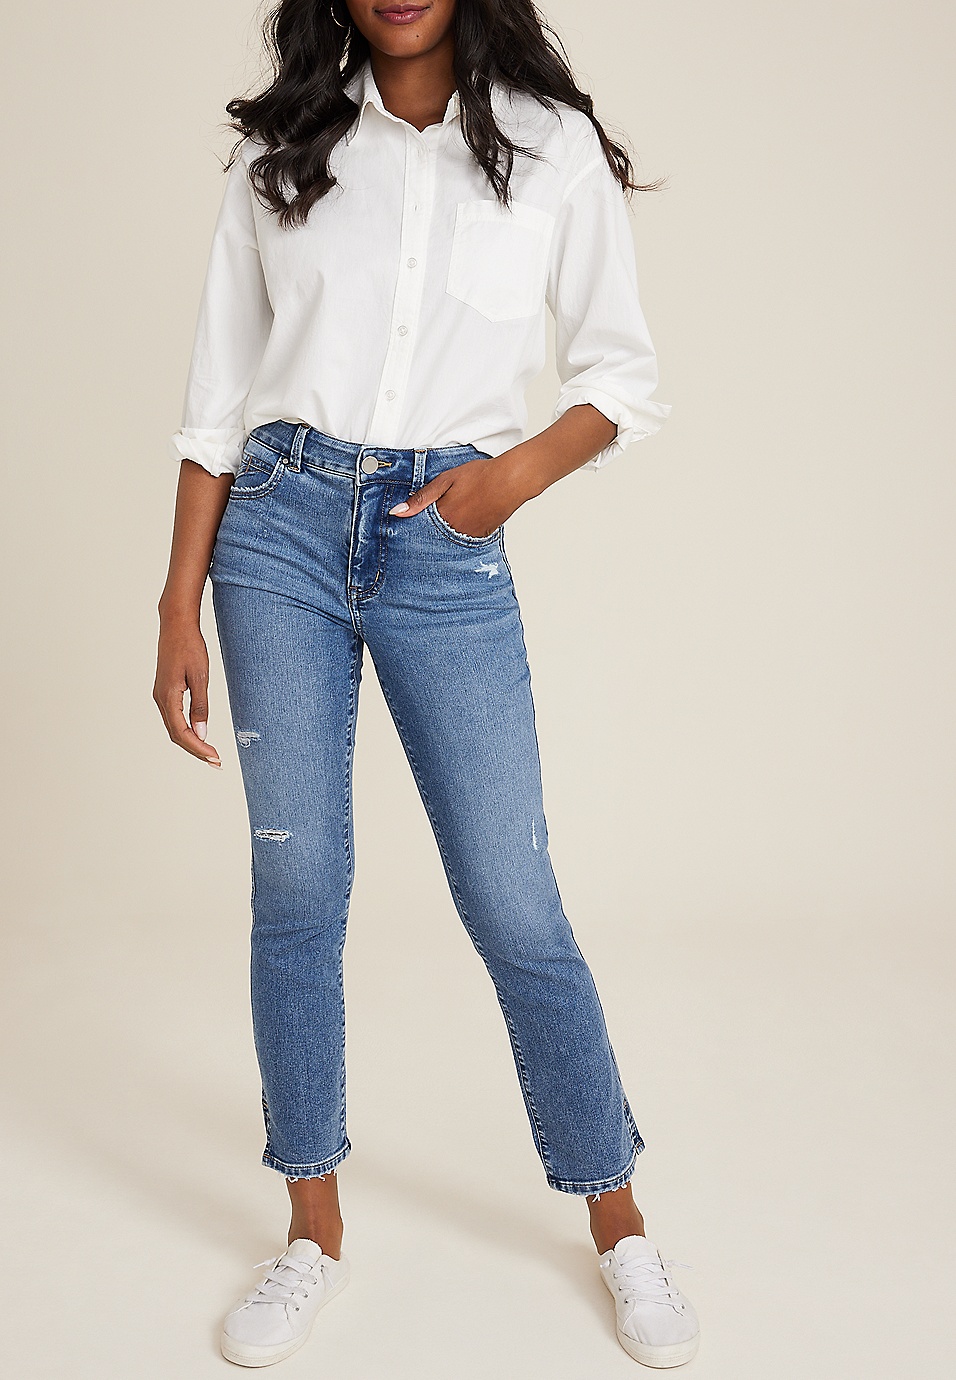 Women's size 18 maurice's jeans high rise medium wash regular inseam